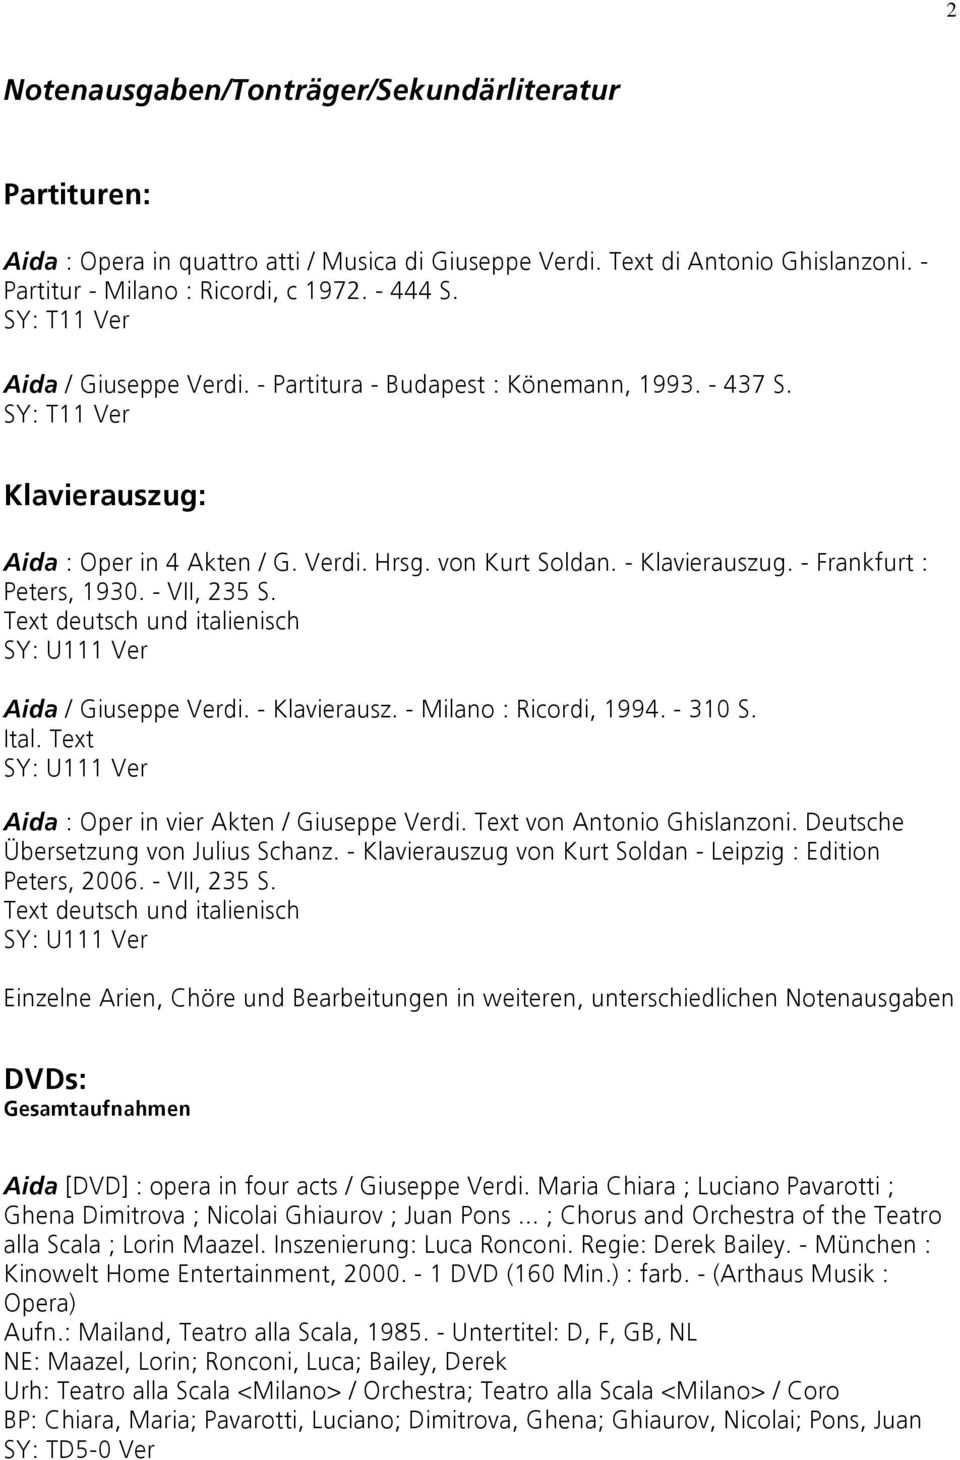 - Frankfurt : Peters, 1930. - VII, 235 S. Text deutsch und italienisch SY: U111 Ver Aida / Giuseppe Verdi. - Klavierausz. - Milano : Ricordi, 1994. - 310 S. Ital.